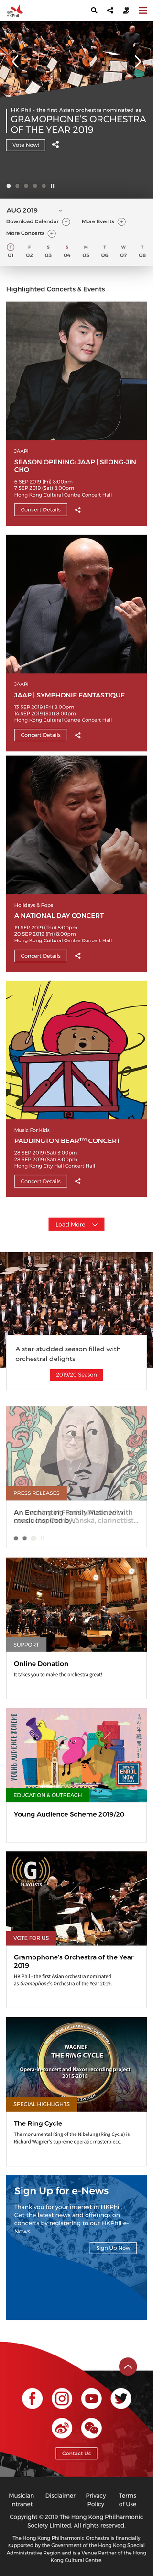 Hong Kong Philharmonic  website screenshot for mobile version 1 of 6